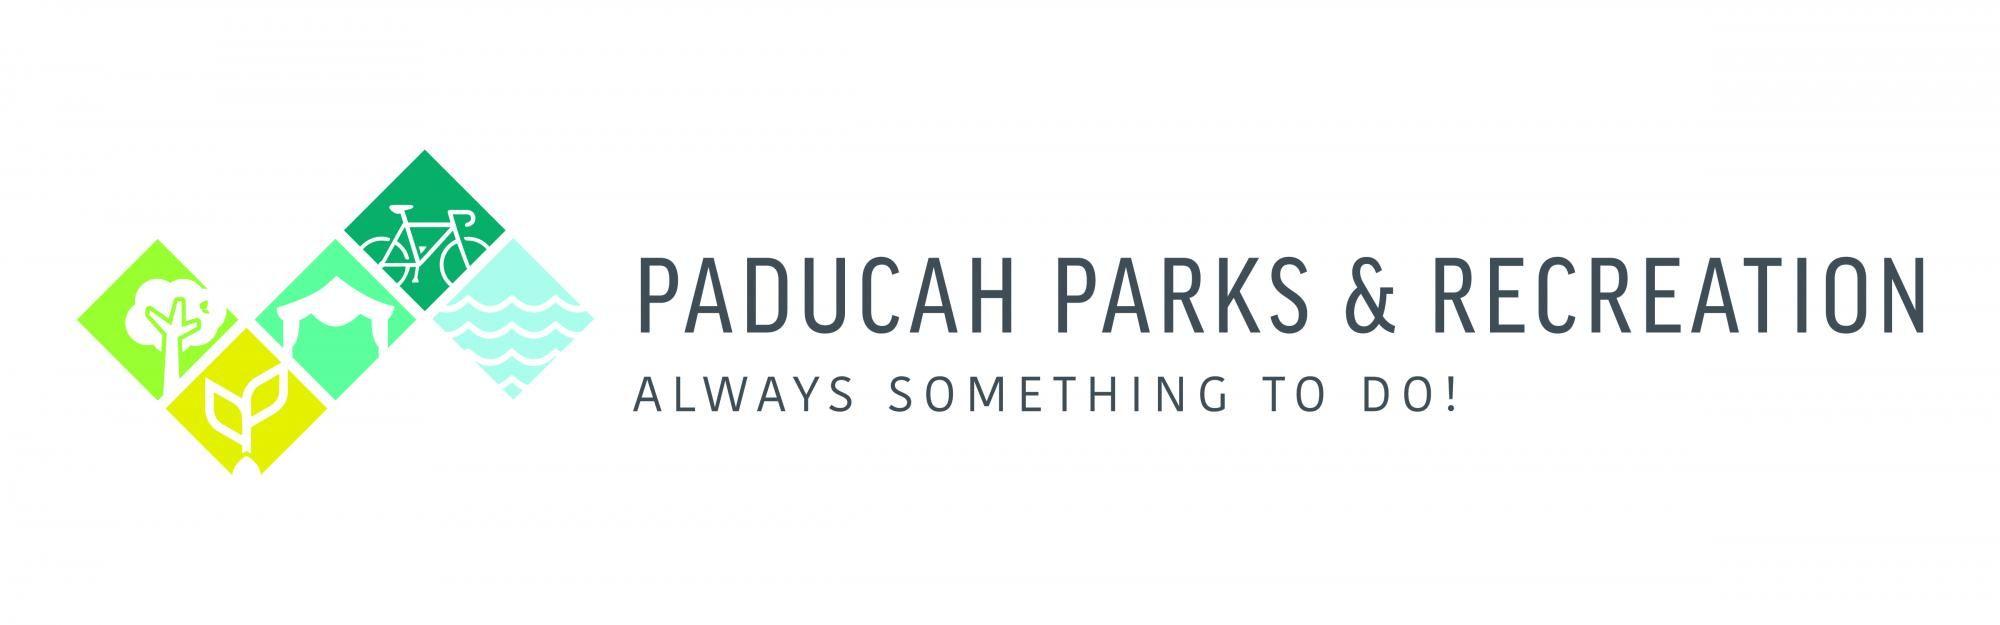 Recreation.gov Logo - Parks & Recreation Department | City of Paducah